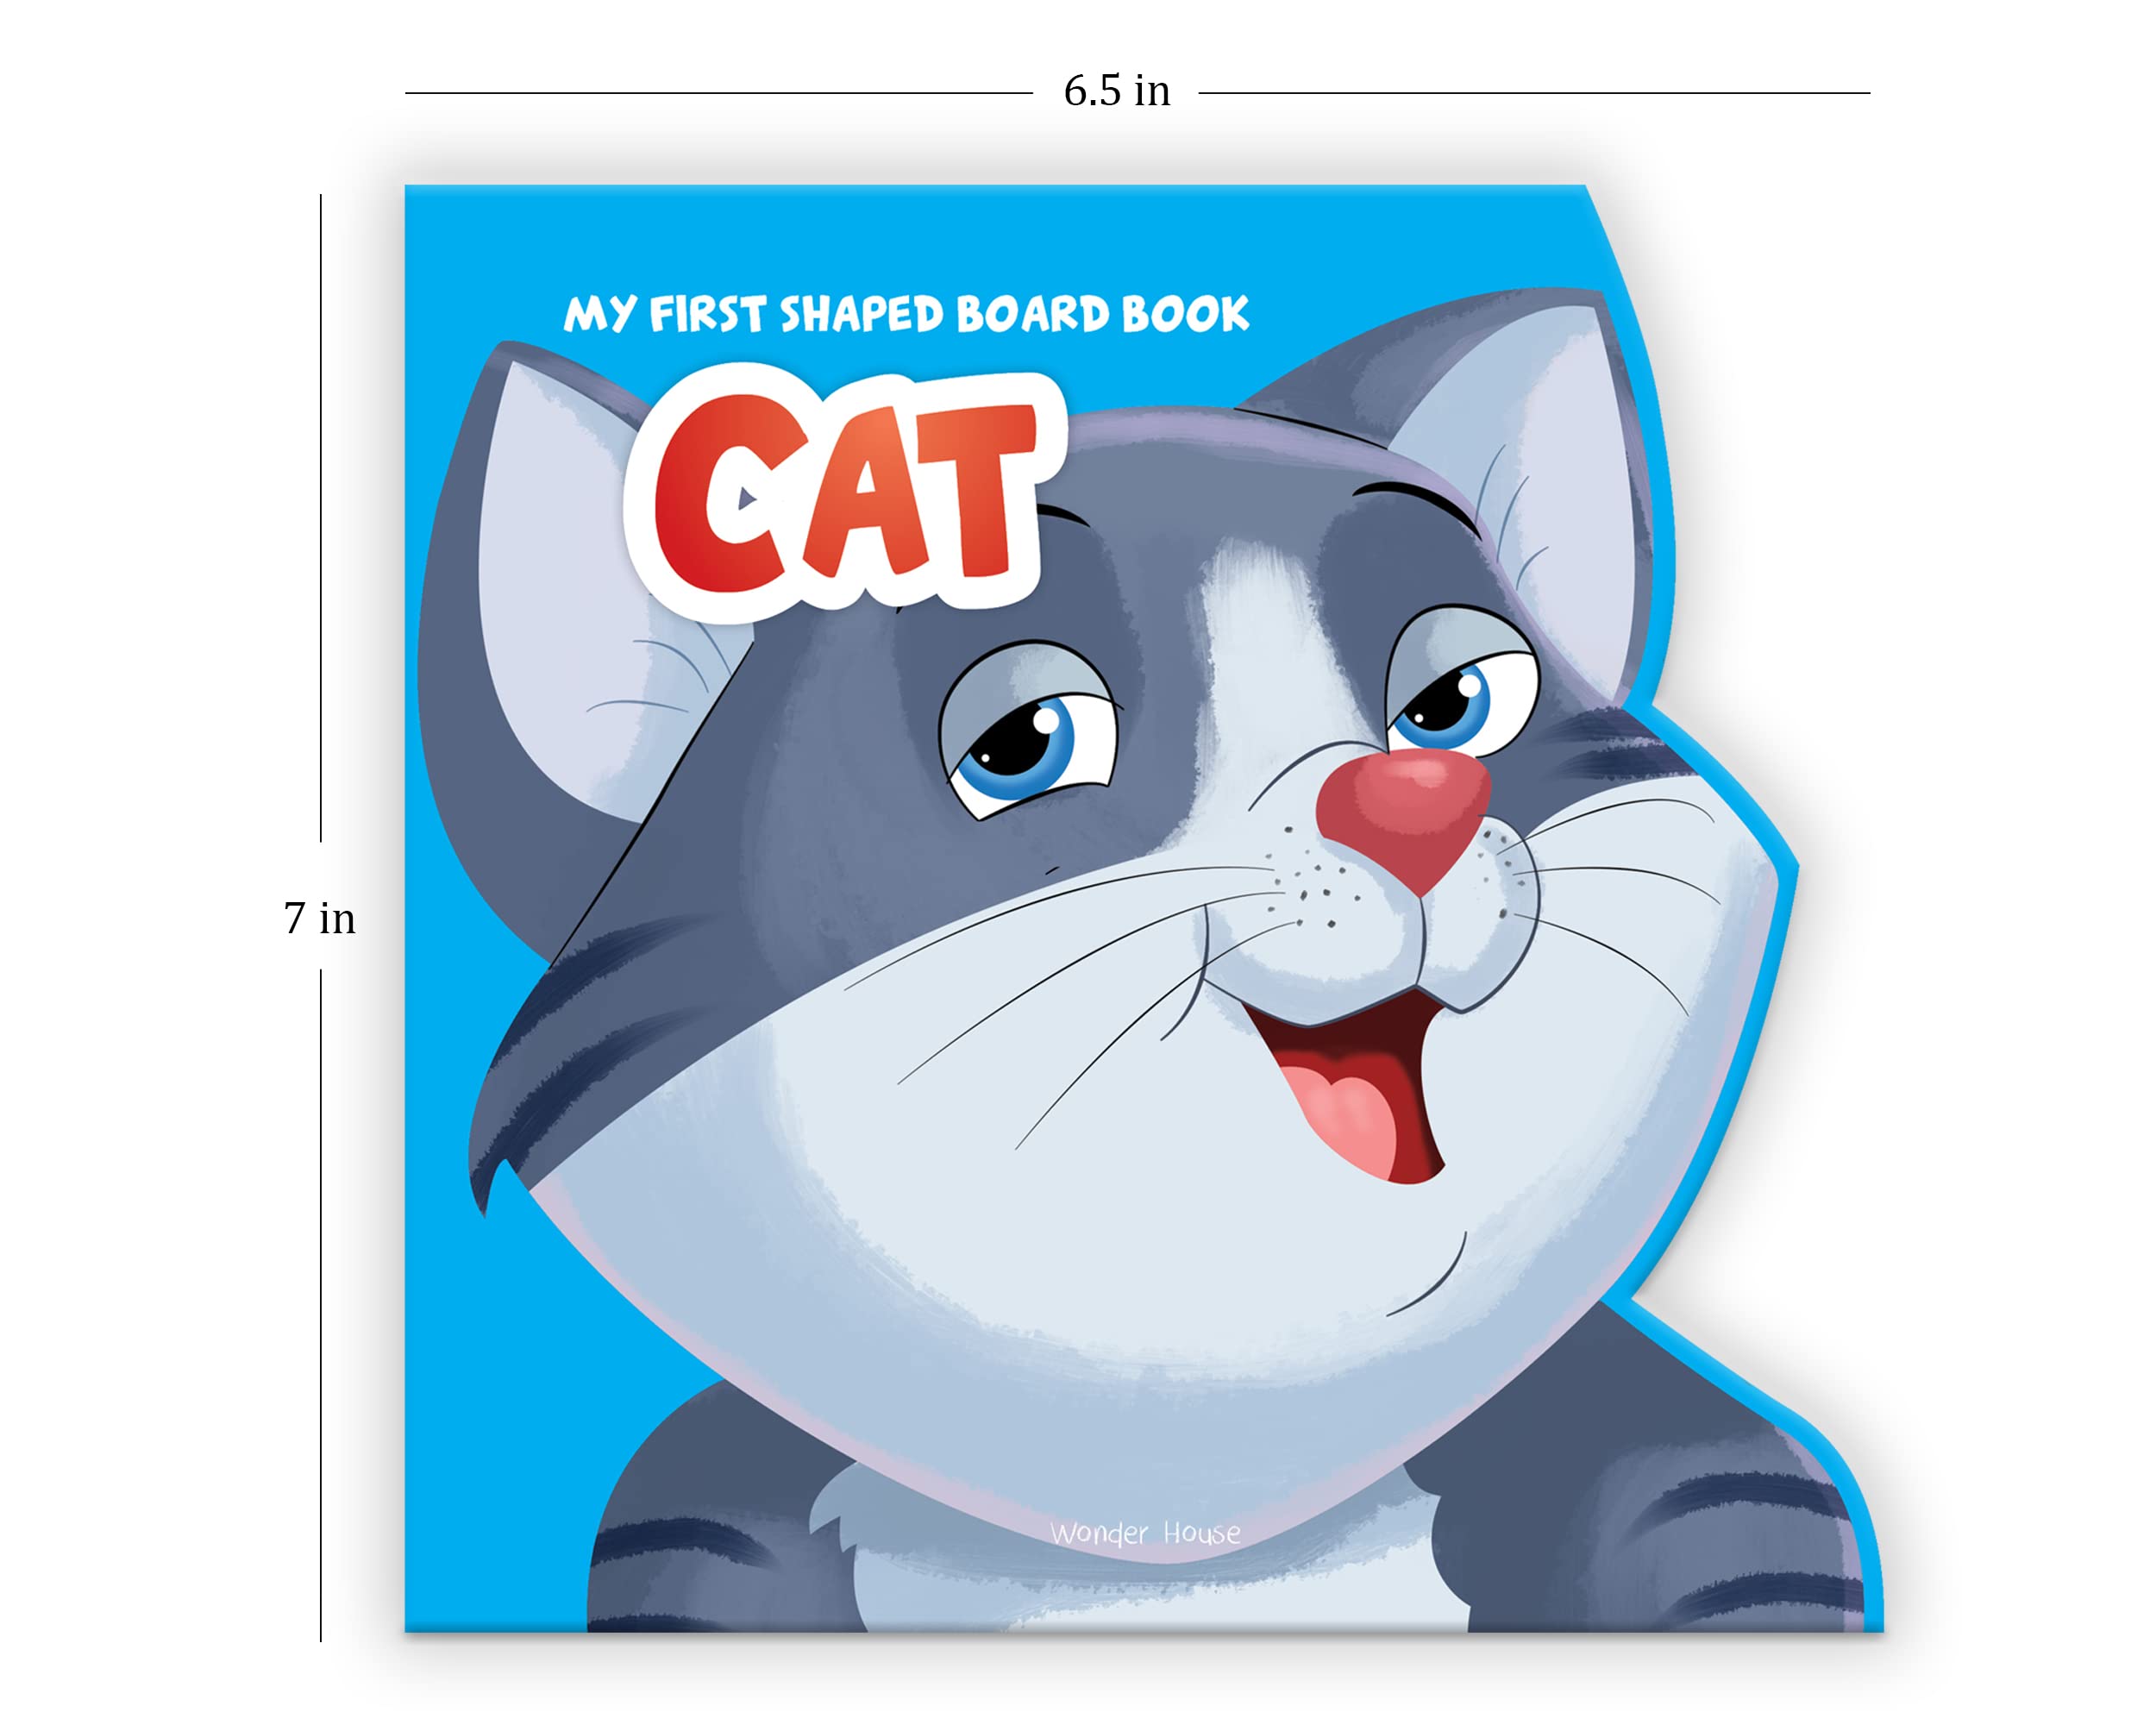 My First Shaped Board book - Cat